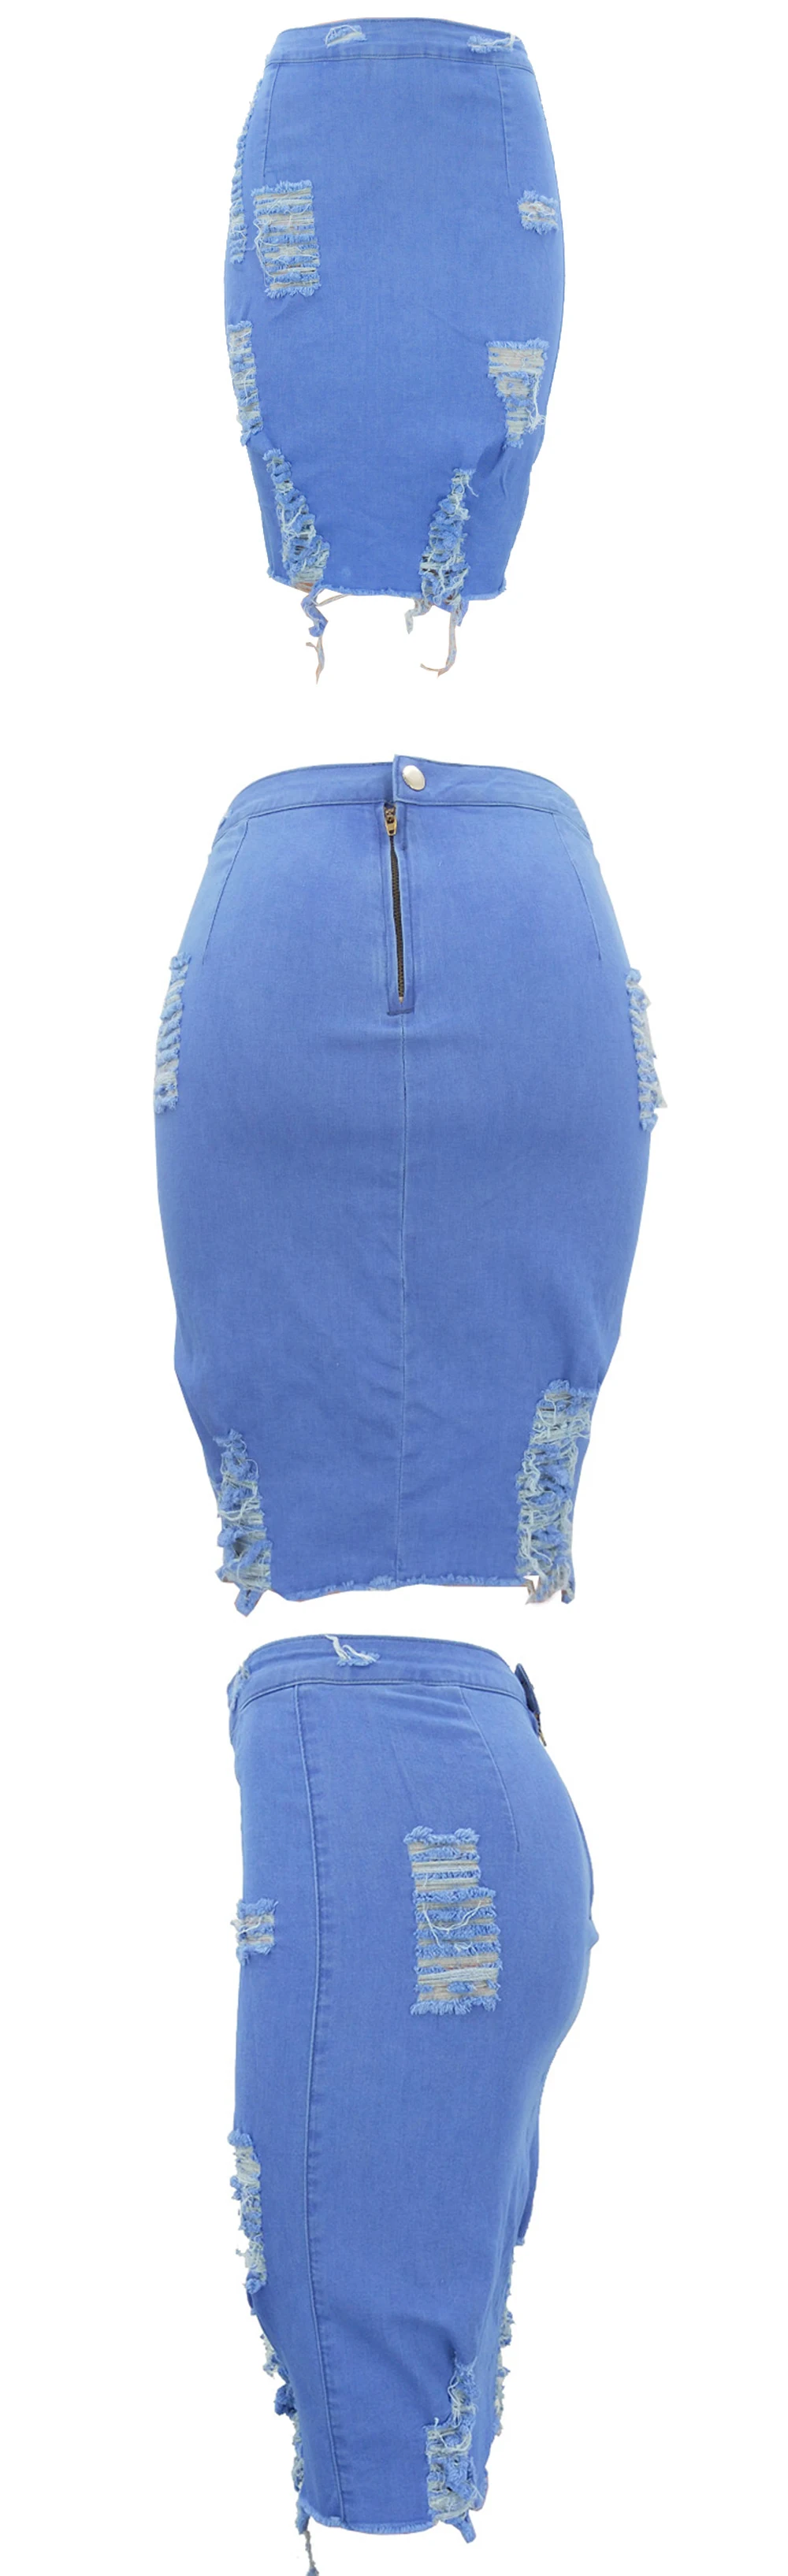 Sexy Denim Skirt for Women Knee Length Tight Skirts Tassels Hole Bust Skirt Hip Skirt Fashion Trend Lady Summer Free Shipping -S5aca698a3f5543fc8452dd82515fd26eX